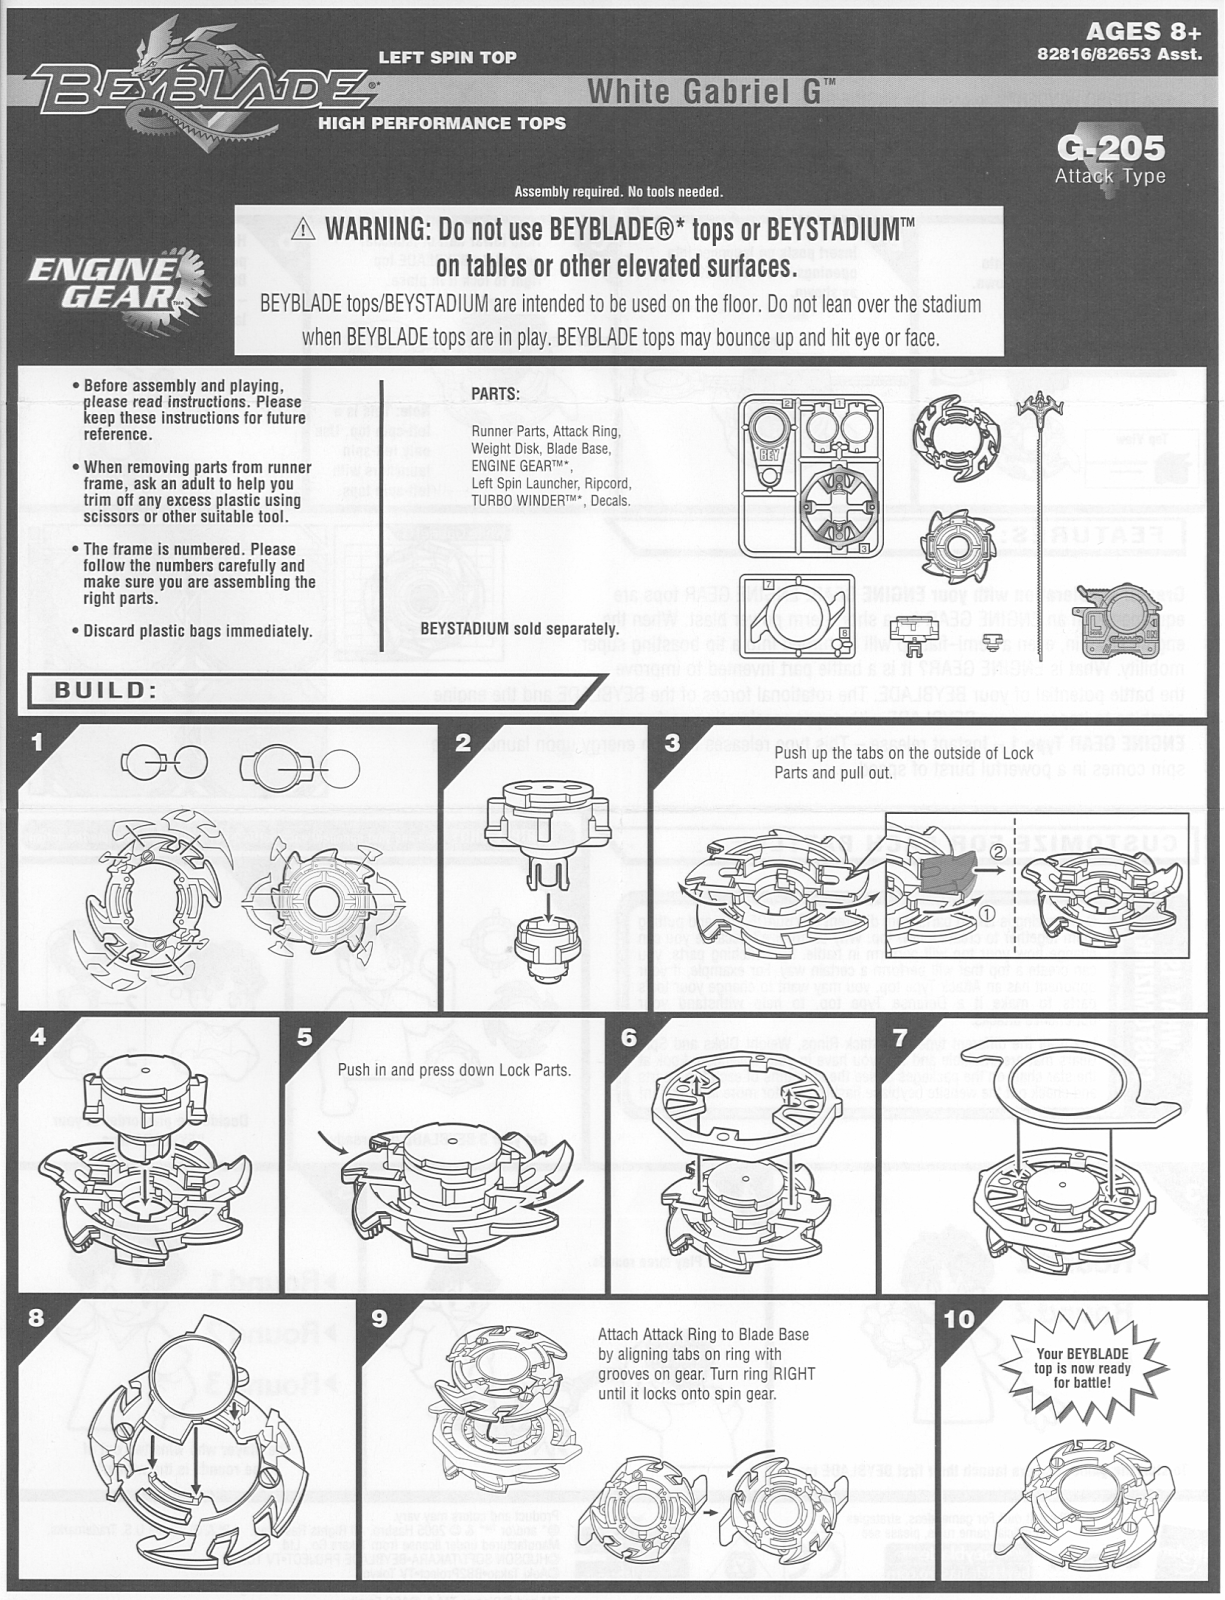 HASBRO Beyblade White Gabriel G Engine Gear User Manual